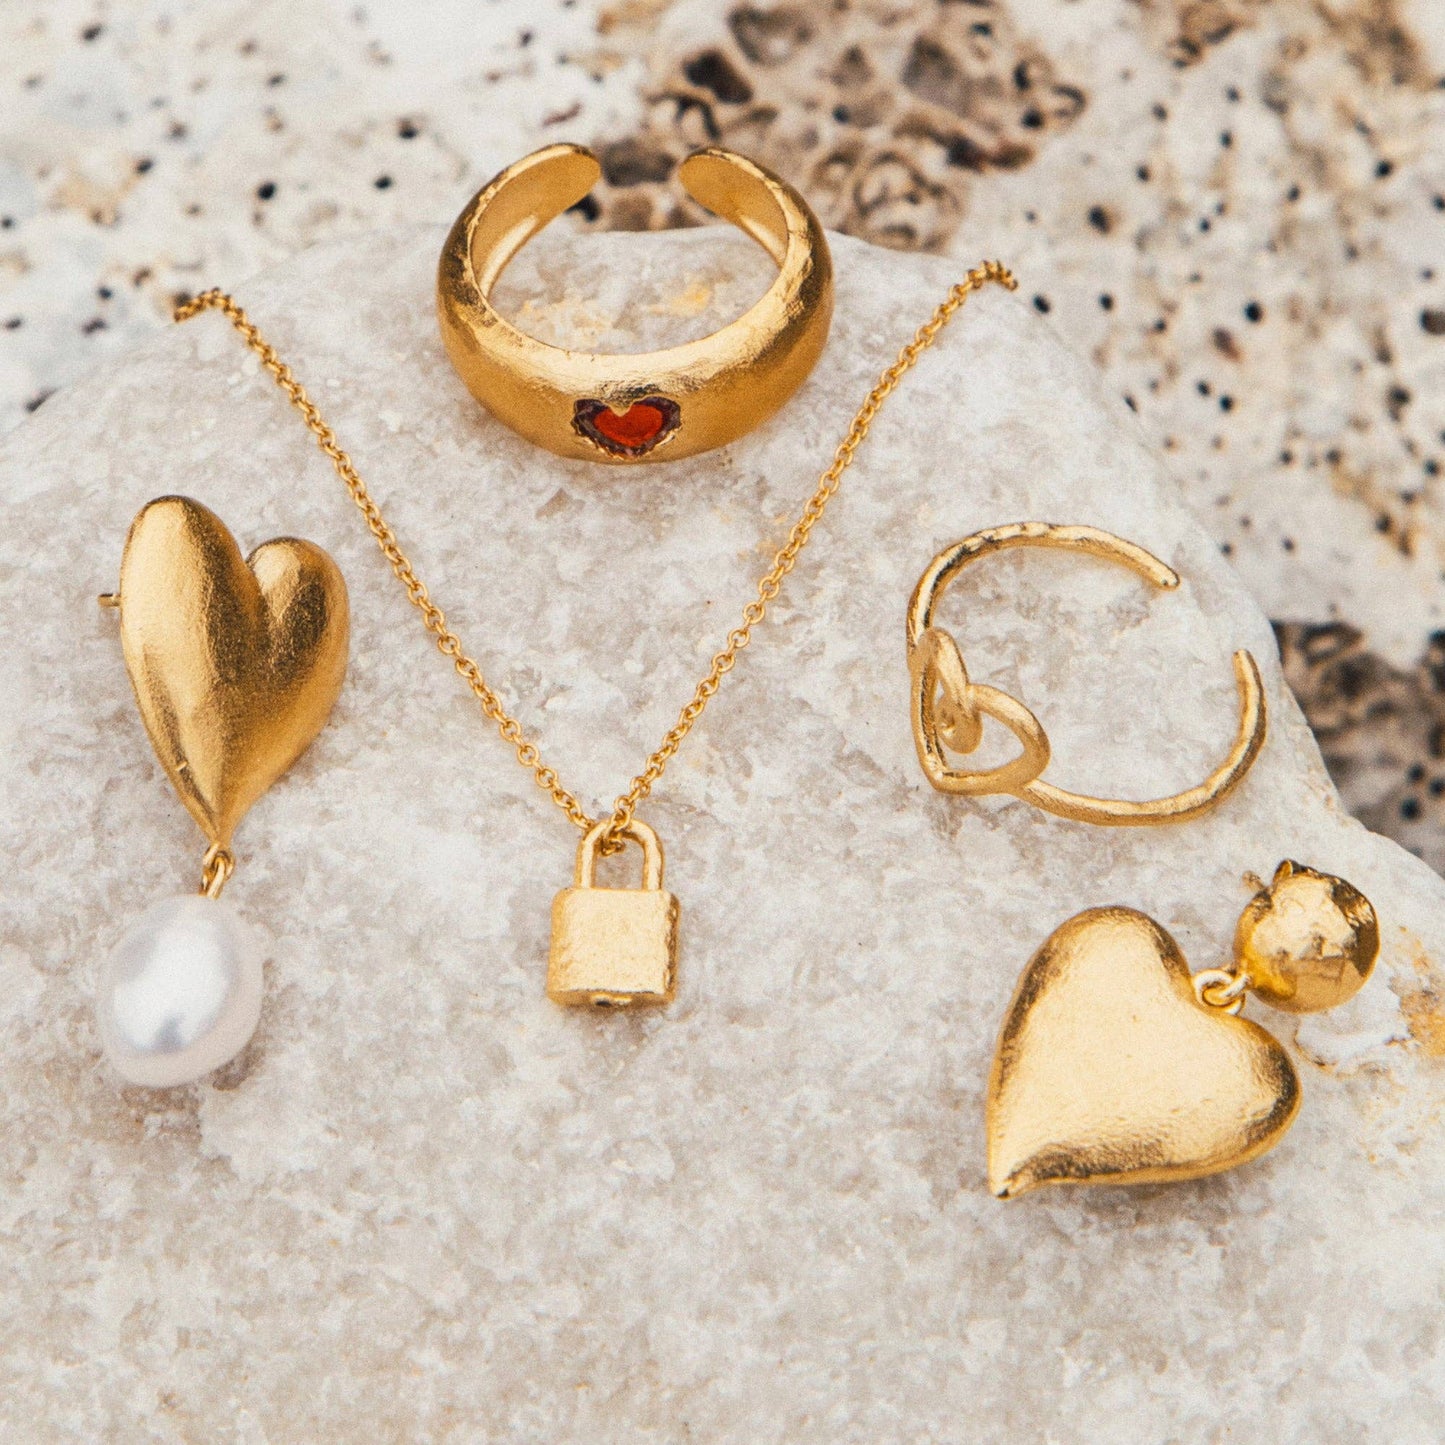 Lourdes Necklace | Jewelry Gold Gift Waterproof - Shop Wild Ivy